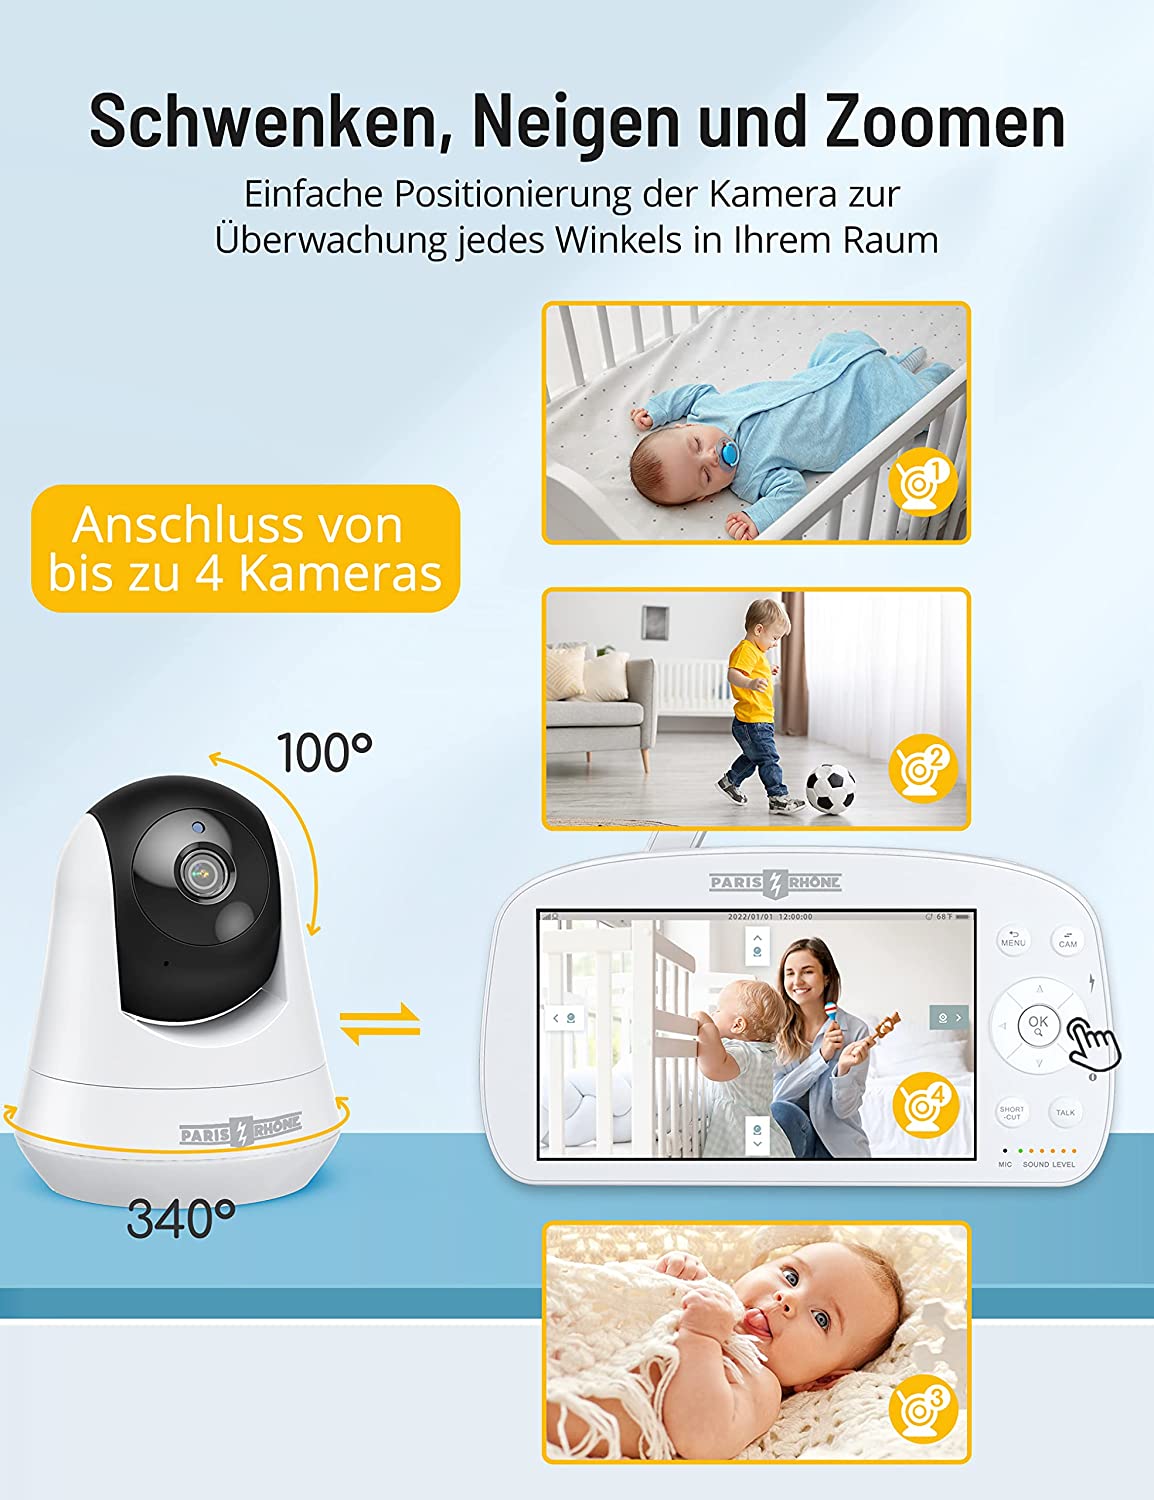 Babyphone mit Kamera 1080P, 5.5 Zoll großes Display Video Baby Monitor